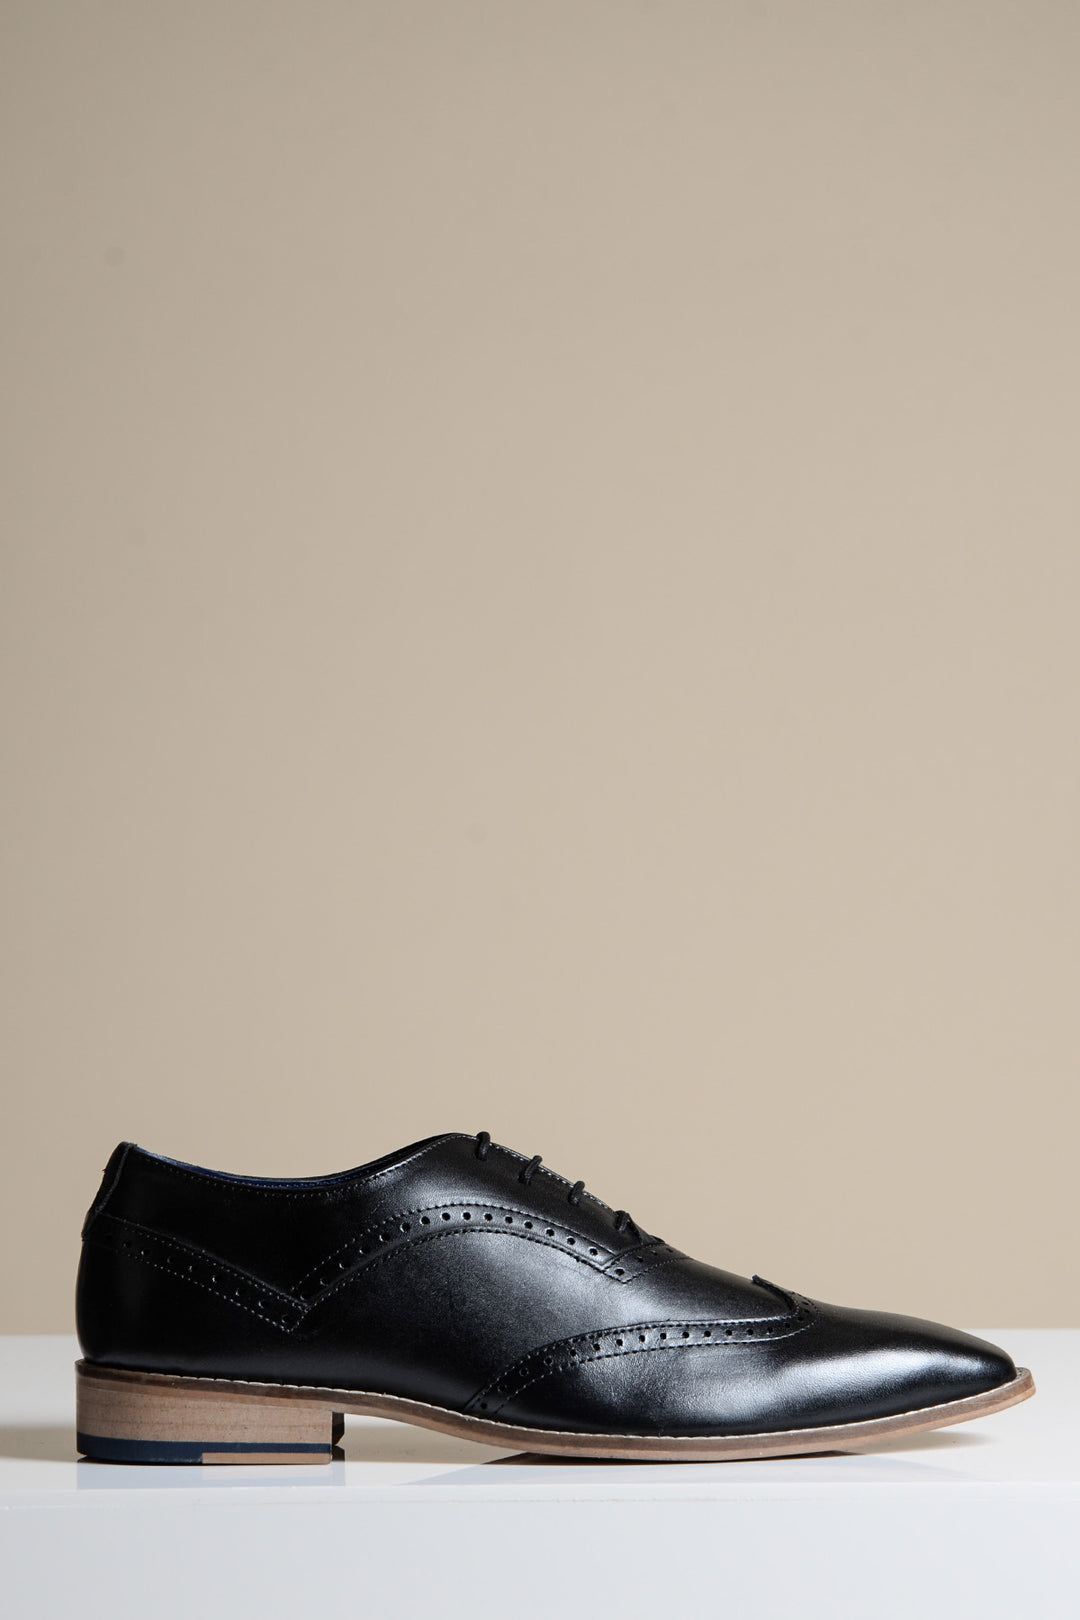 DAWSON - Black Wingtip Oxford Brogue Shoe